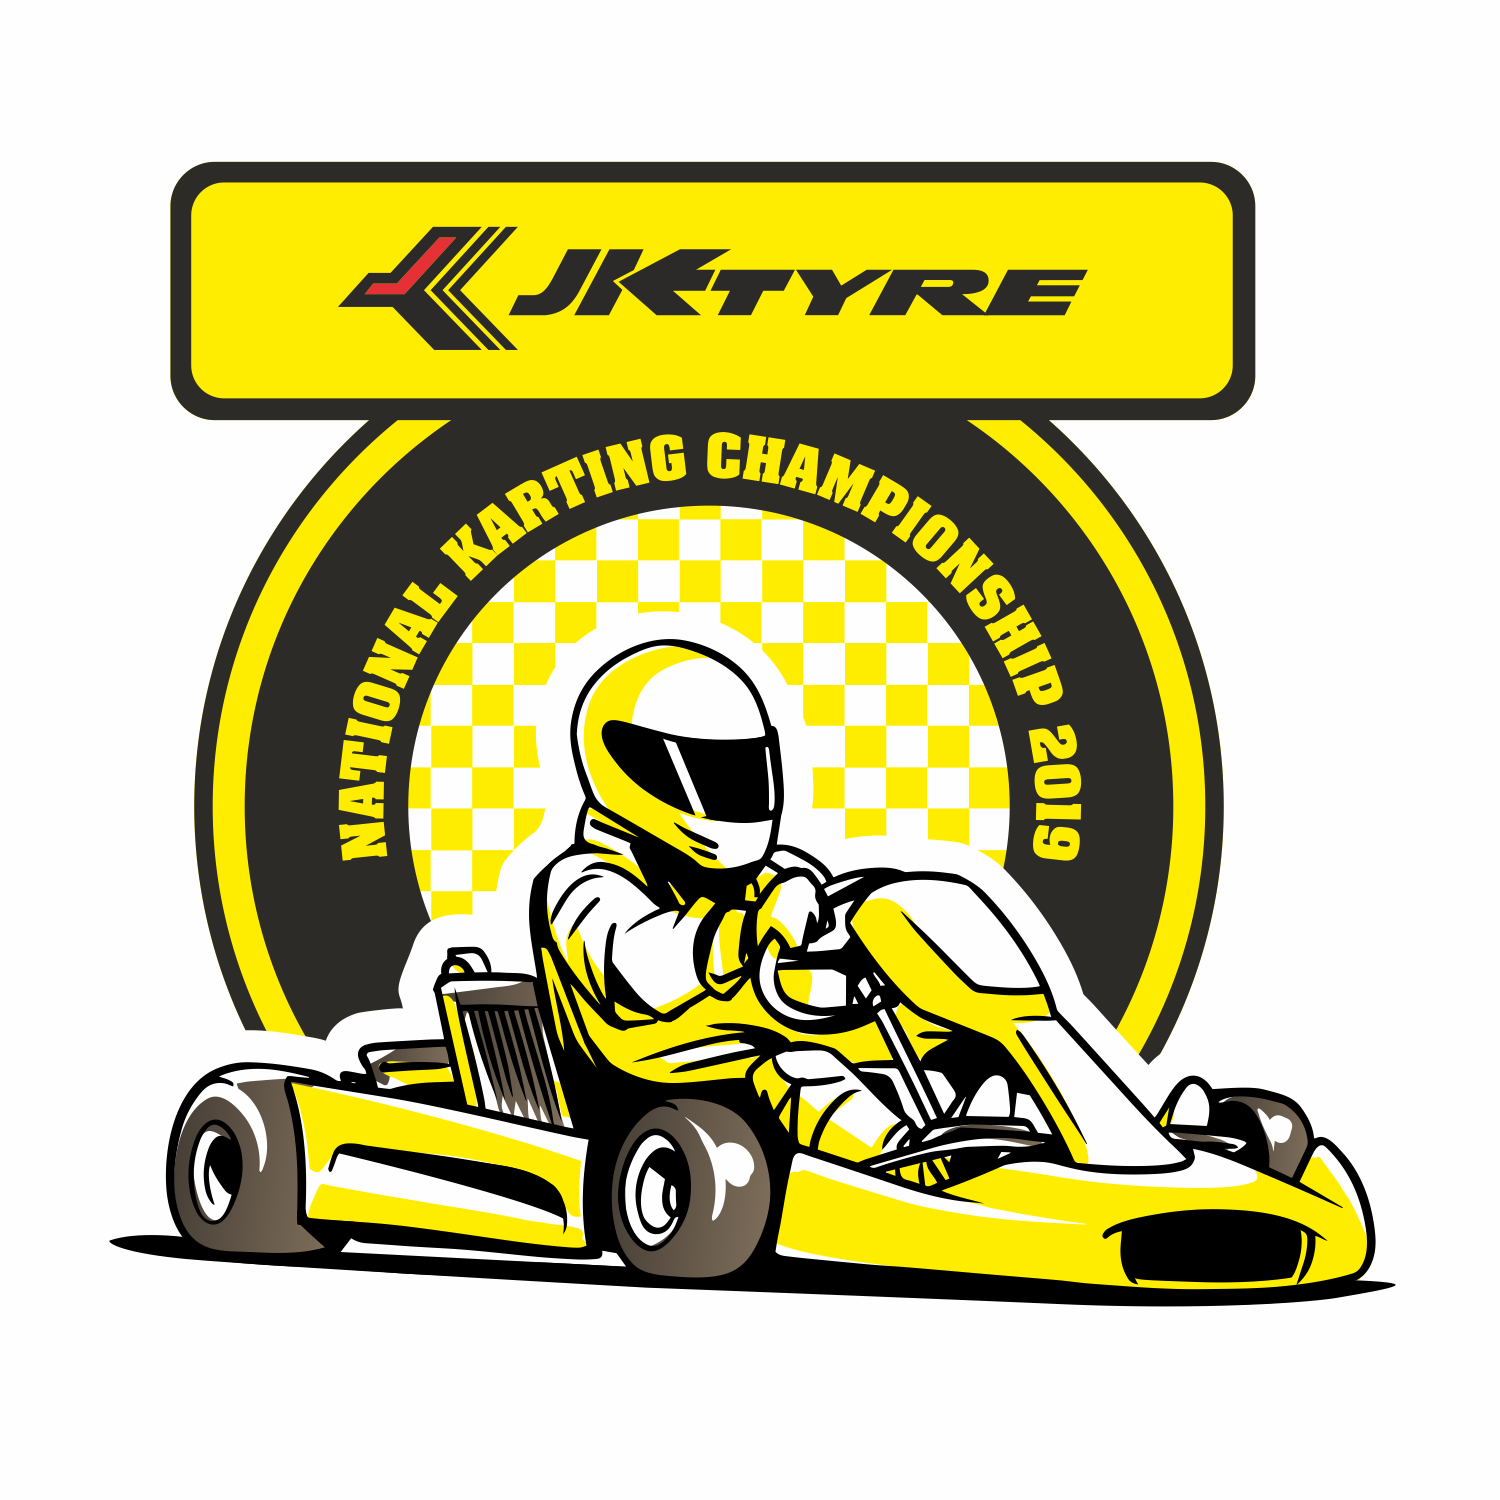 jk-tyre-national-karting-championship-gets-bigger-this-year-jk-tyre-motorsport